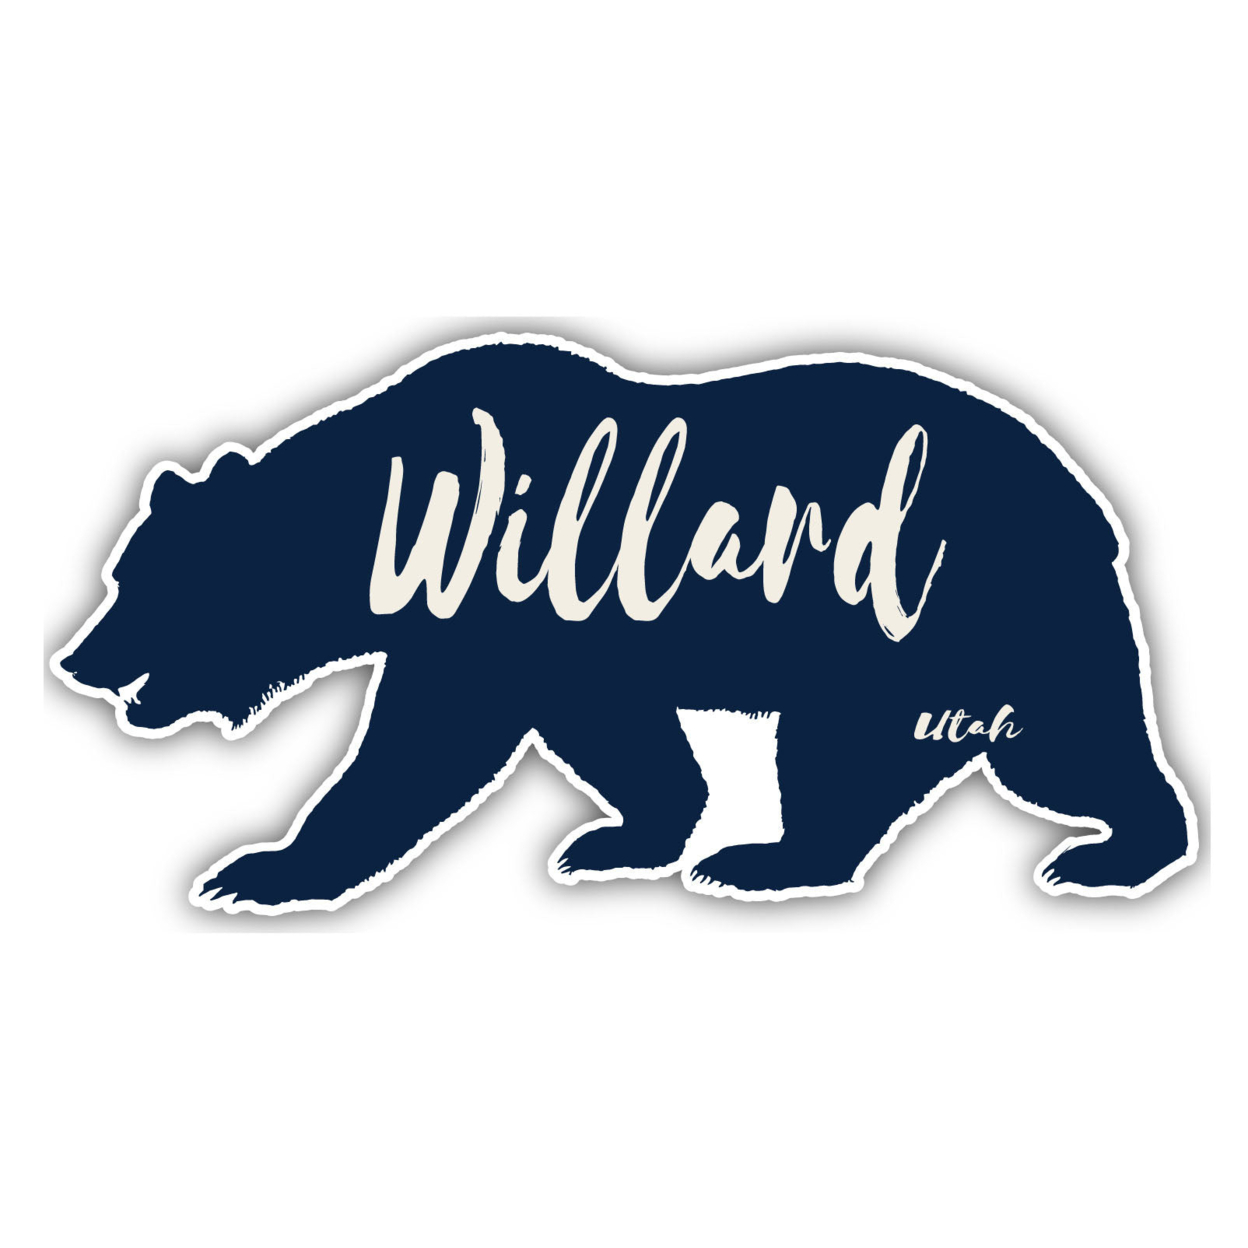 Willard Utah Souvenir Decorative Stickers (Choose Theme And Size) - Single Unit, 2-Inch, Bear